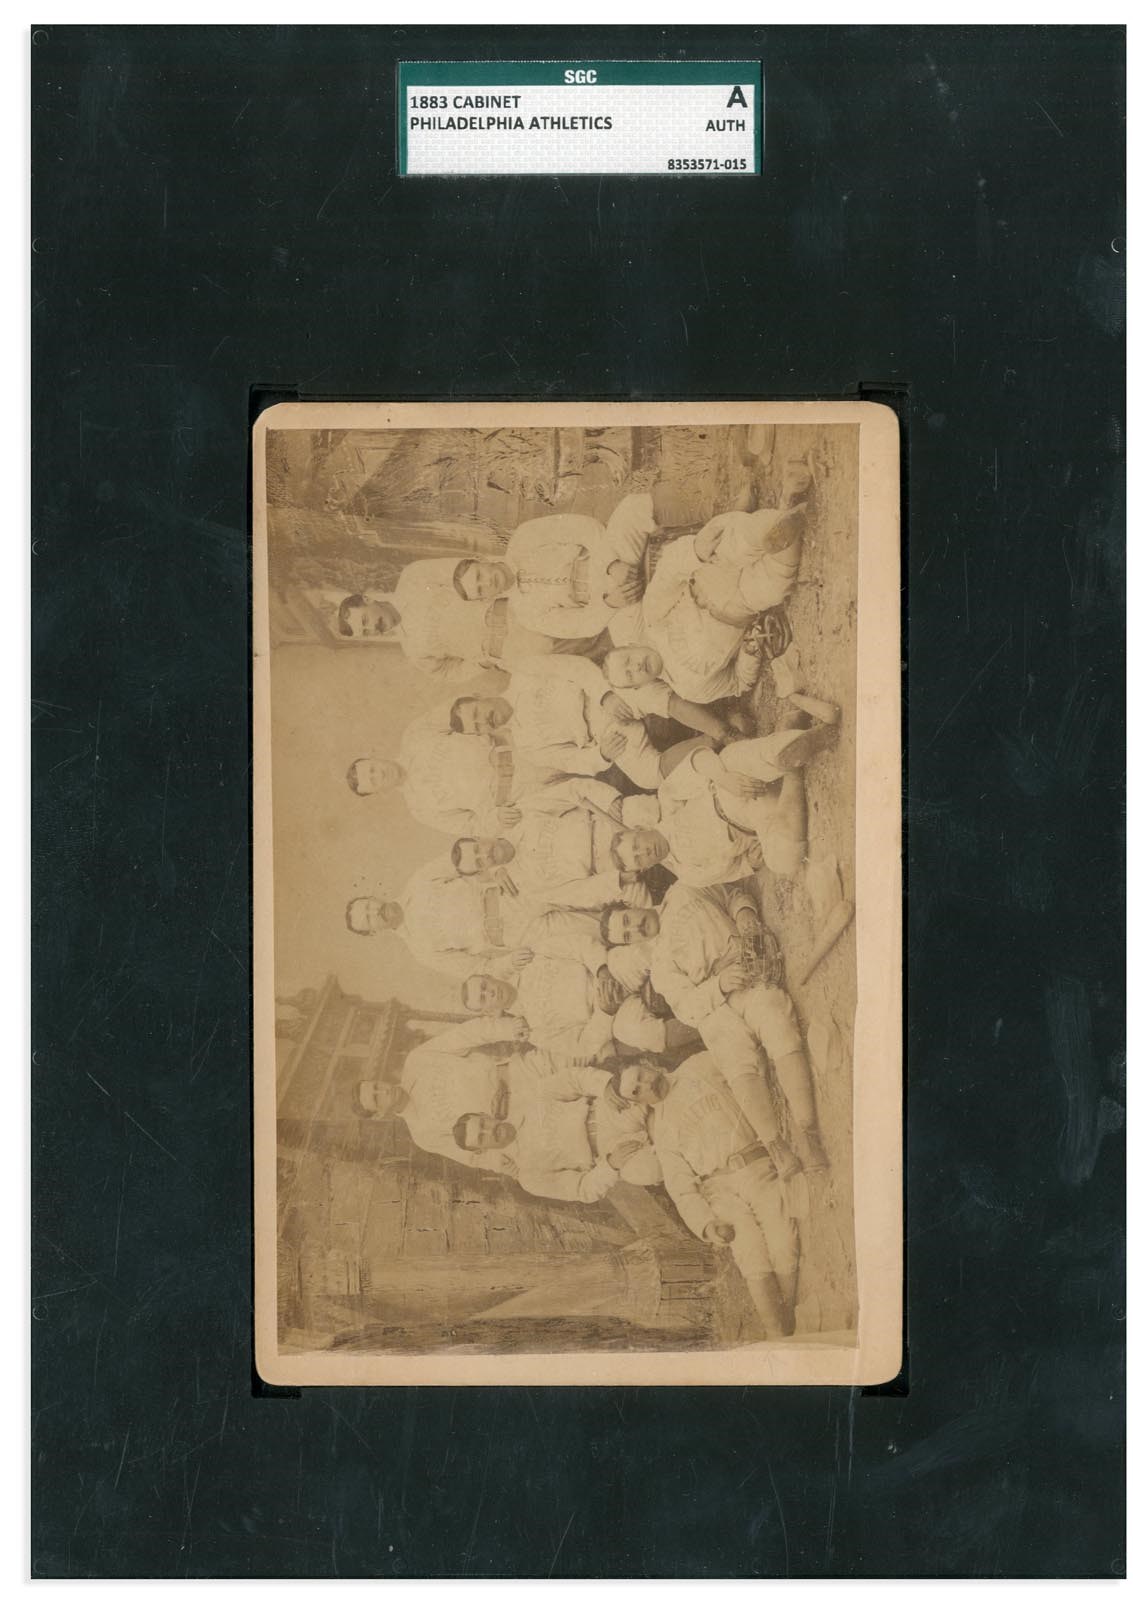 1883 Philadelphia Athletics Cabinet Photo (SGC A)